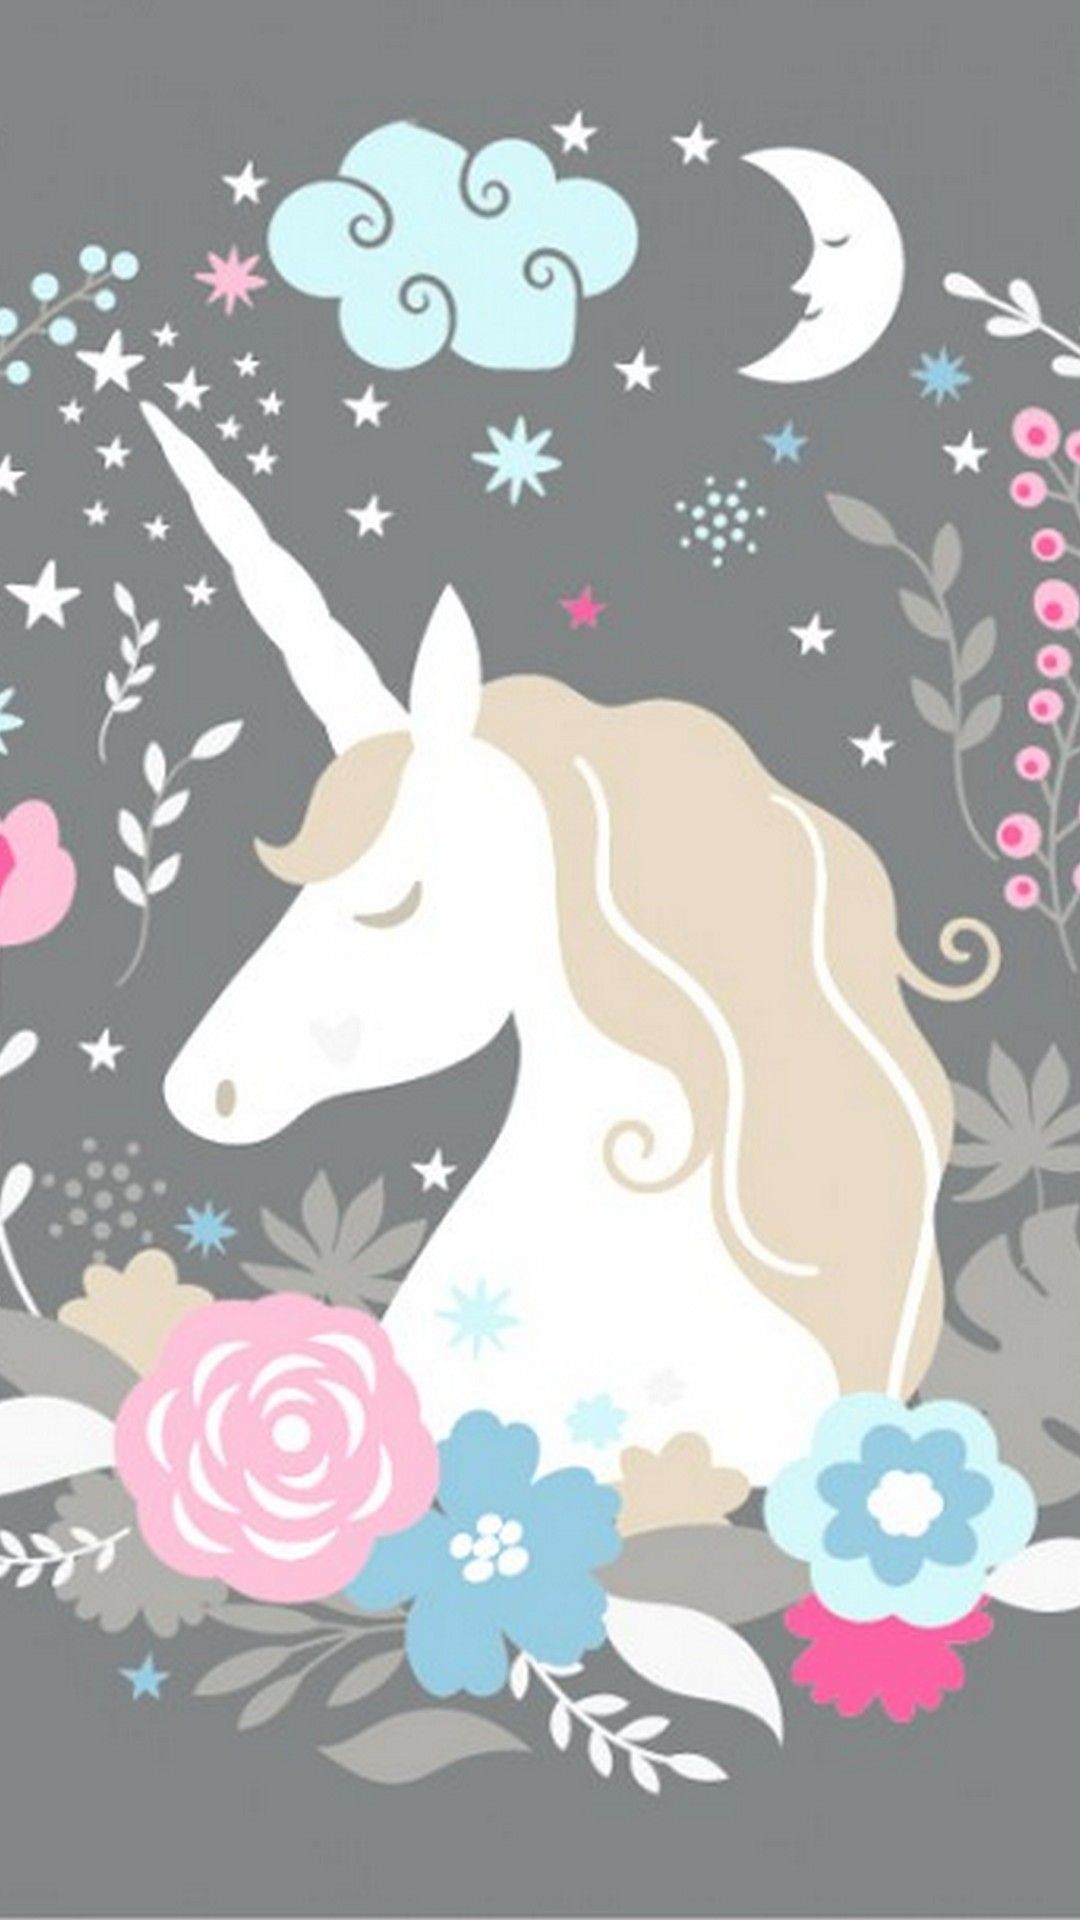 Cute Girly Unicorn iPhone 7 Wallpaper 3D iPhone Wallpaper